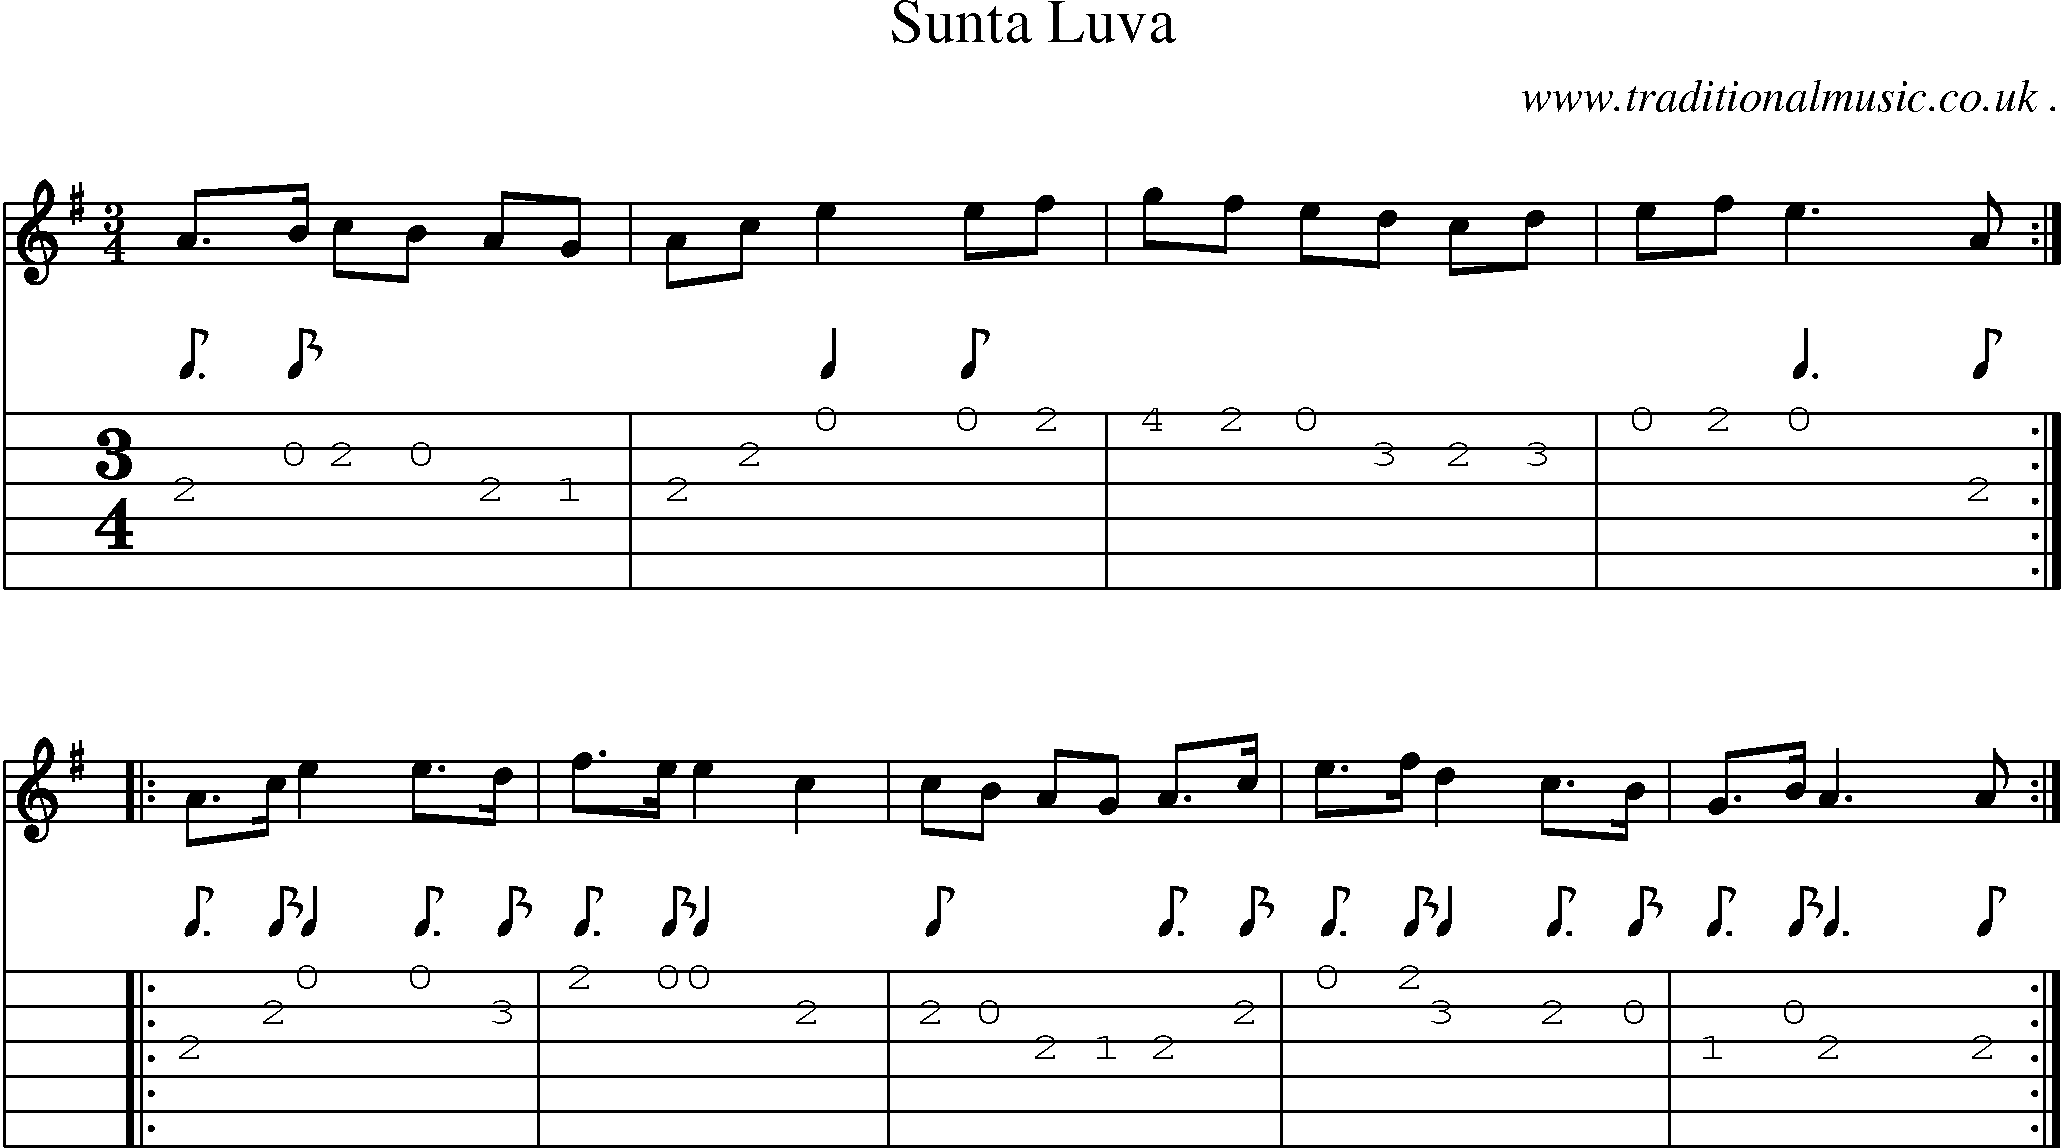 Sheet-Music and Guitar Tabs for Sunta Luva